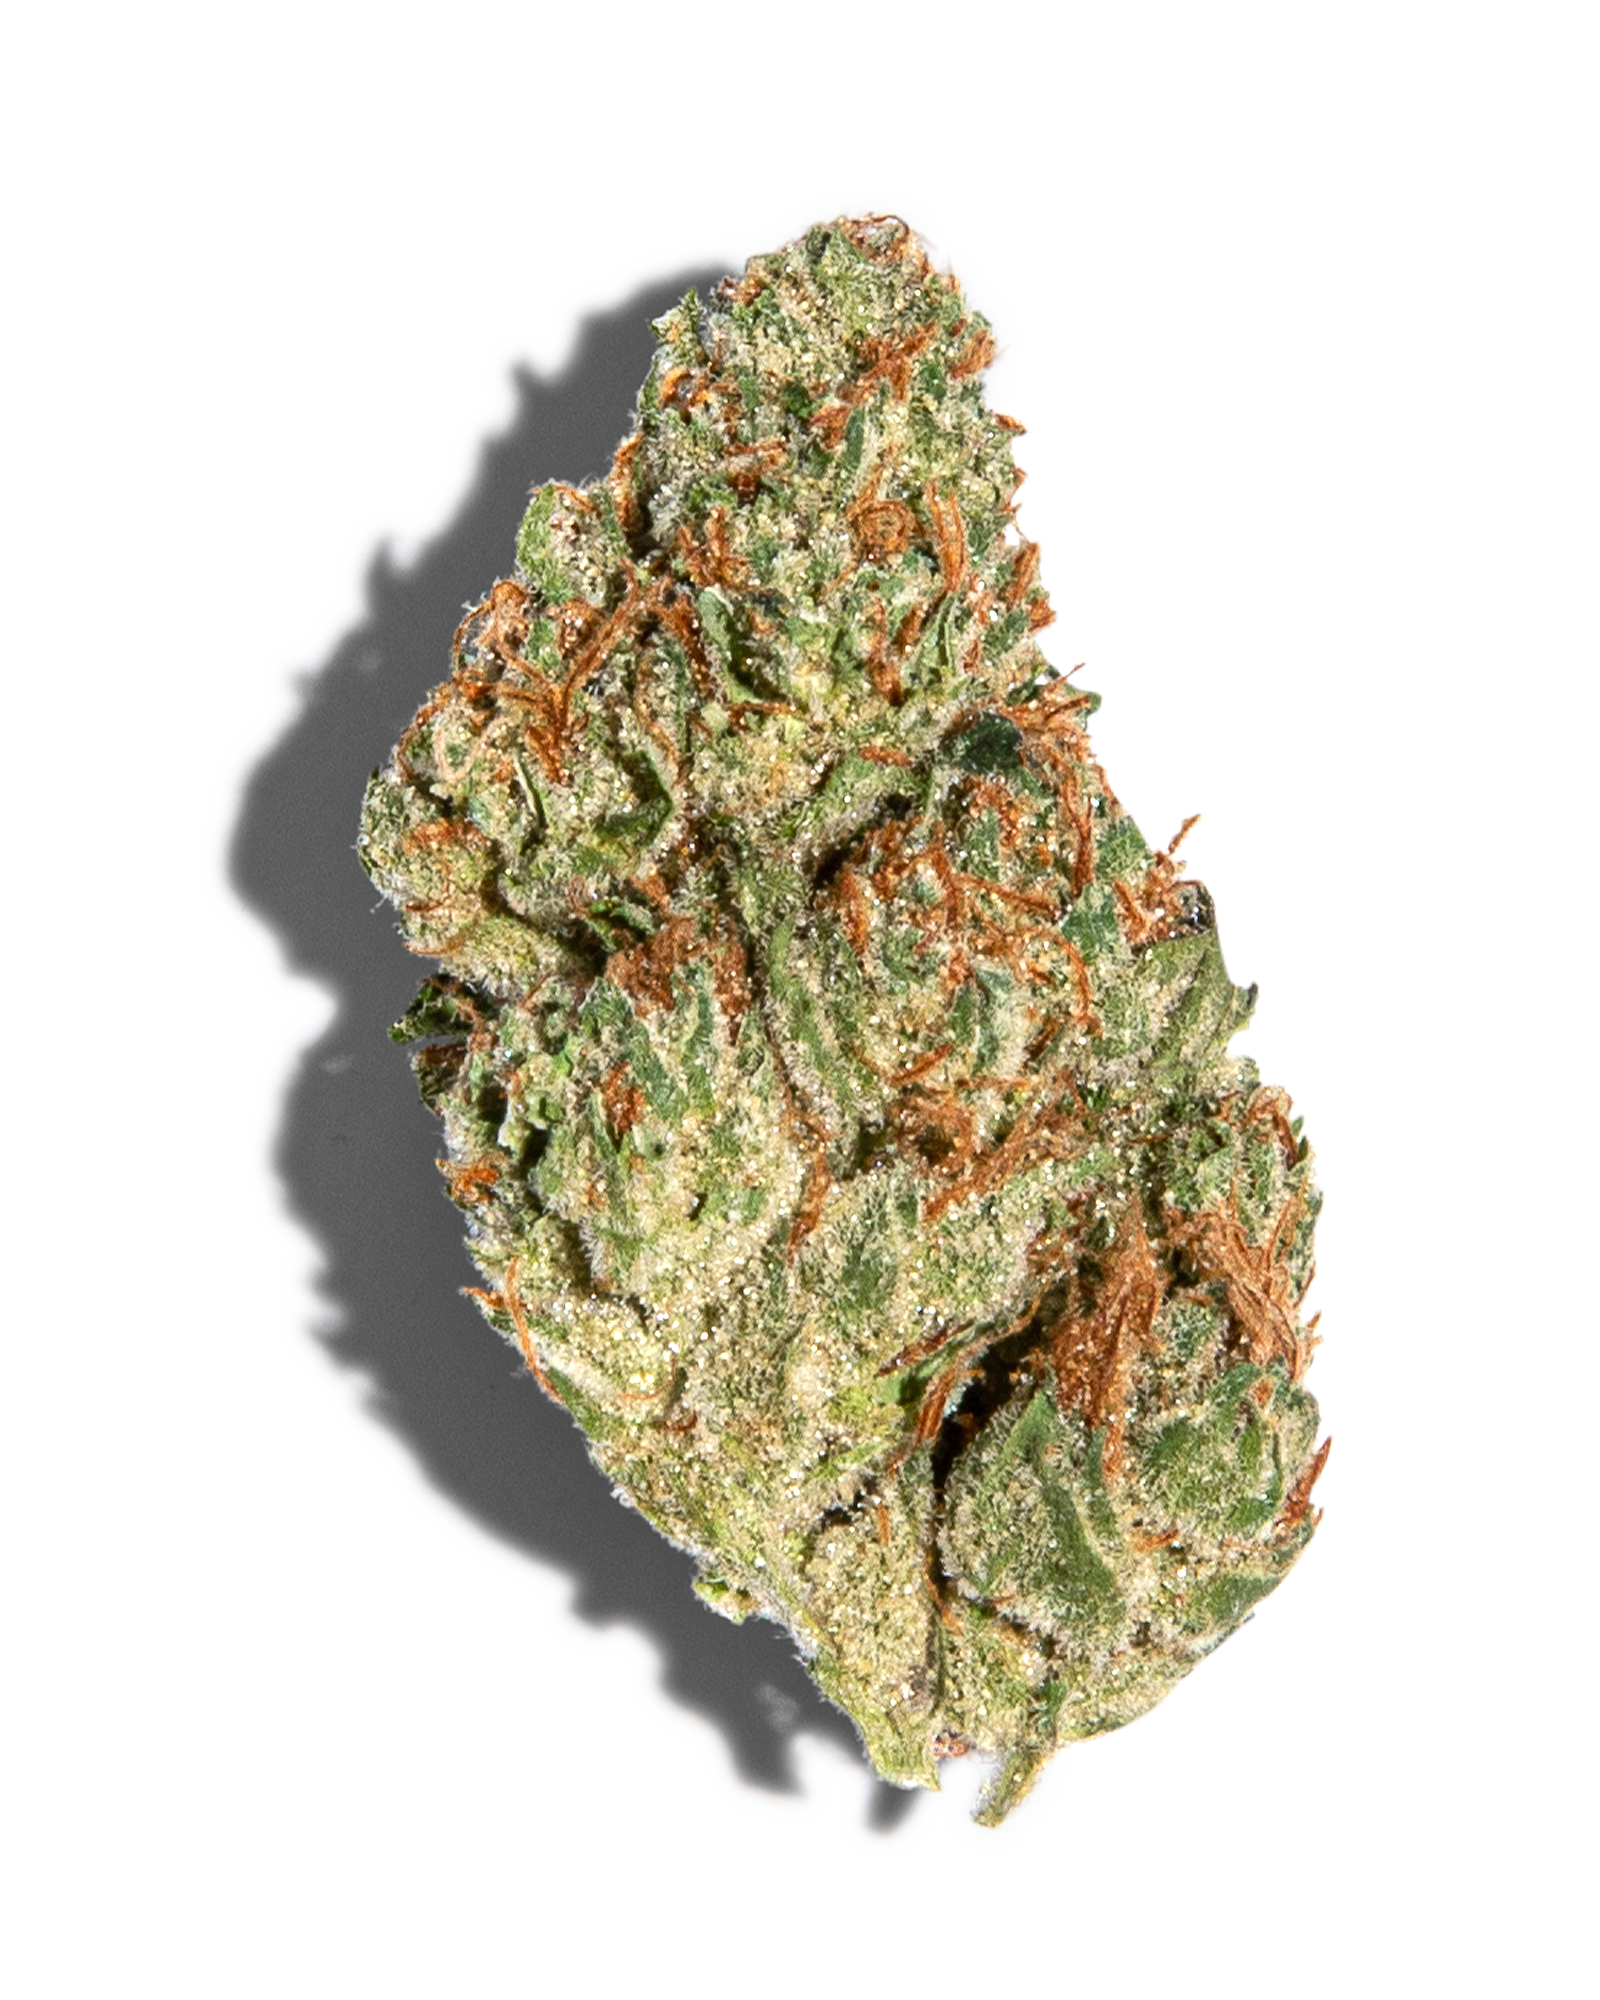 Blueberry crumble cannabis bud